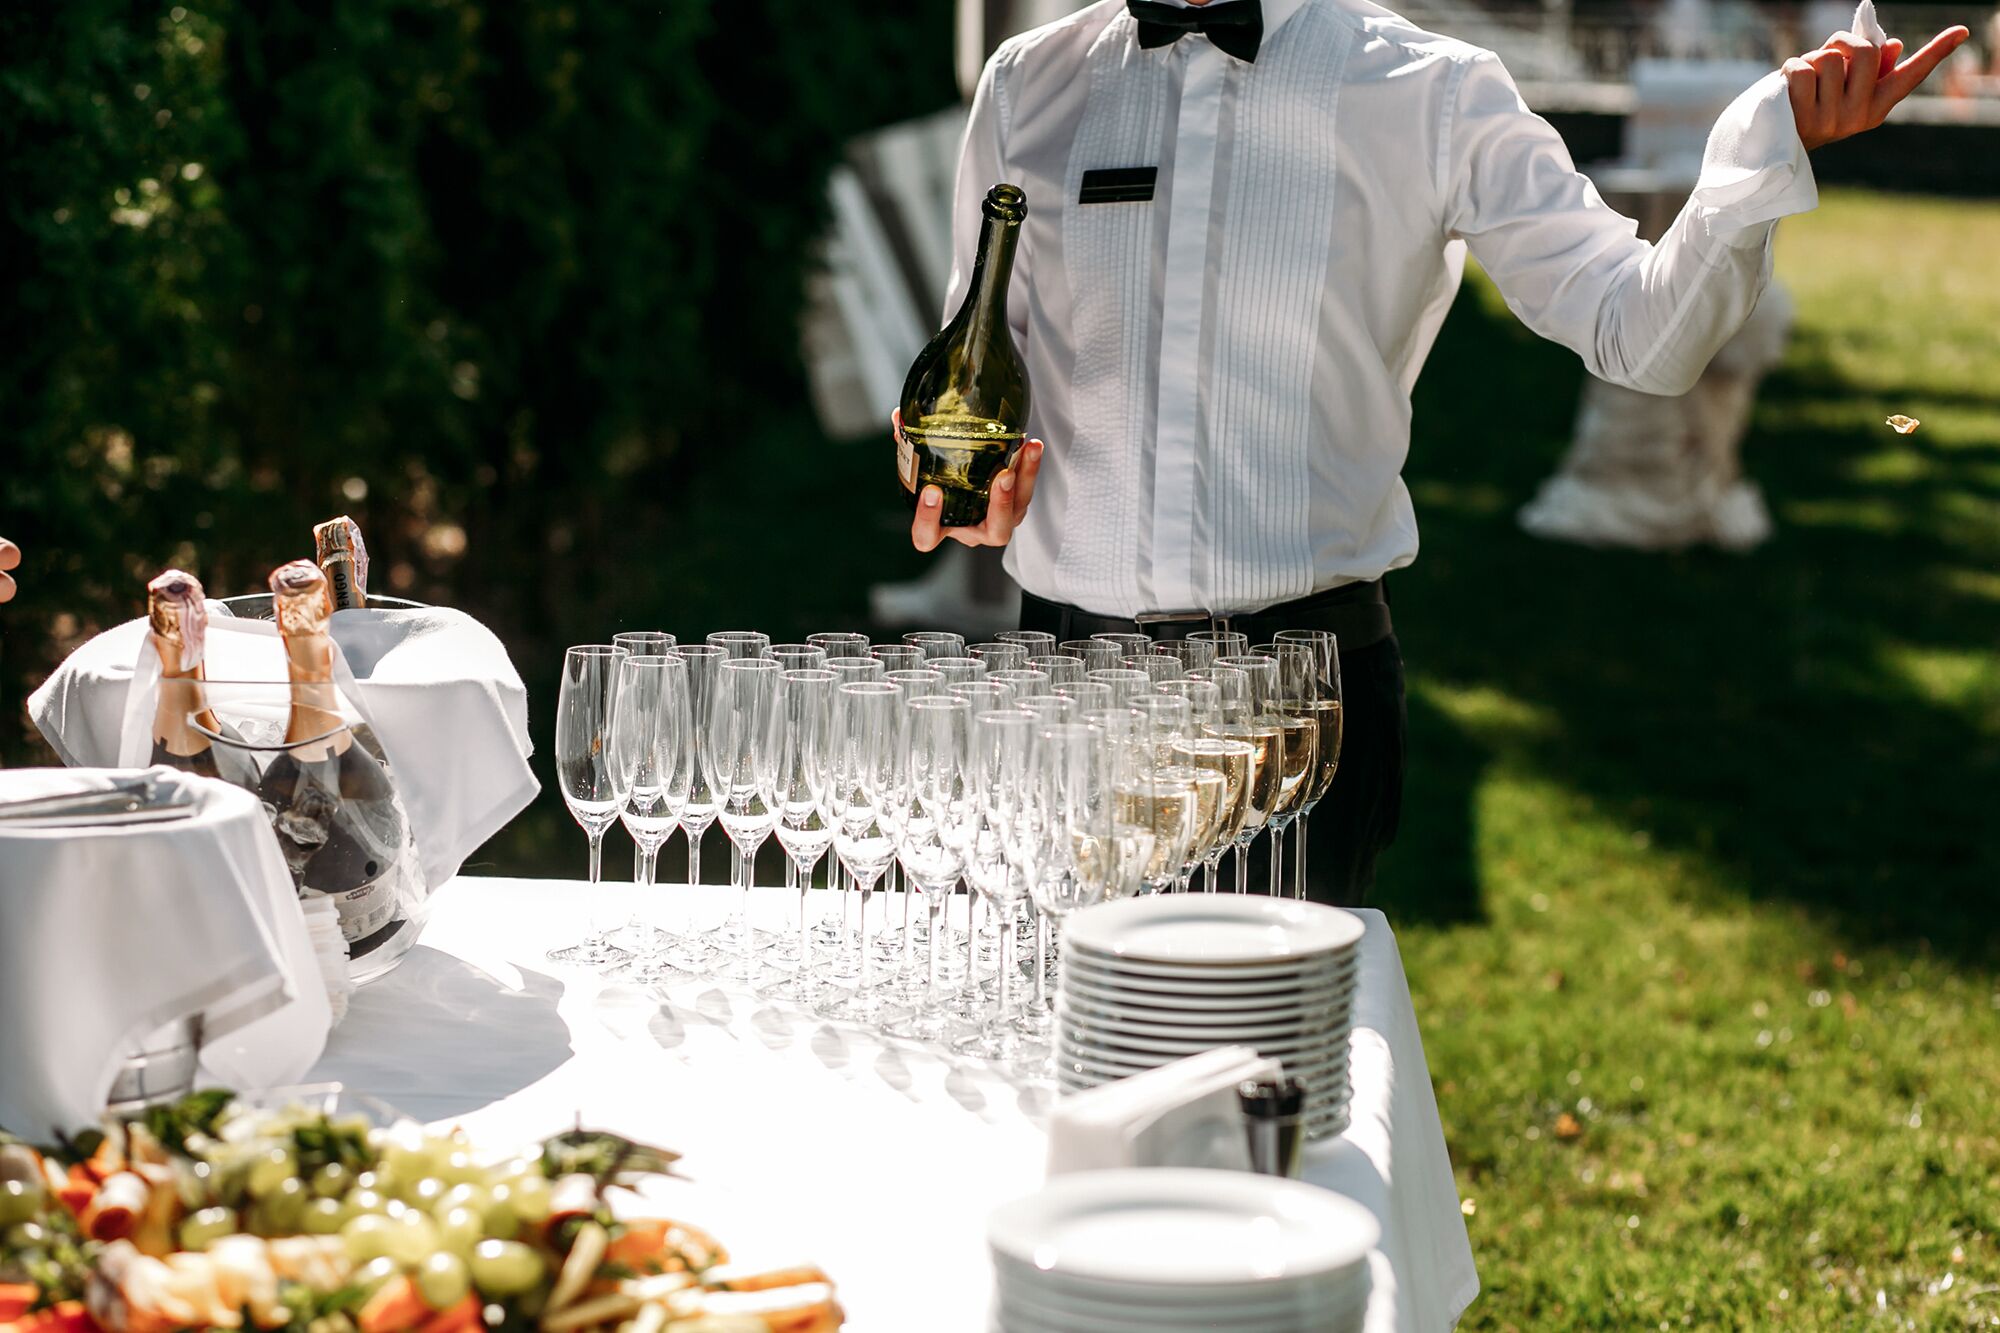 Wedding bartender ready to serve champagne